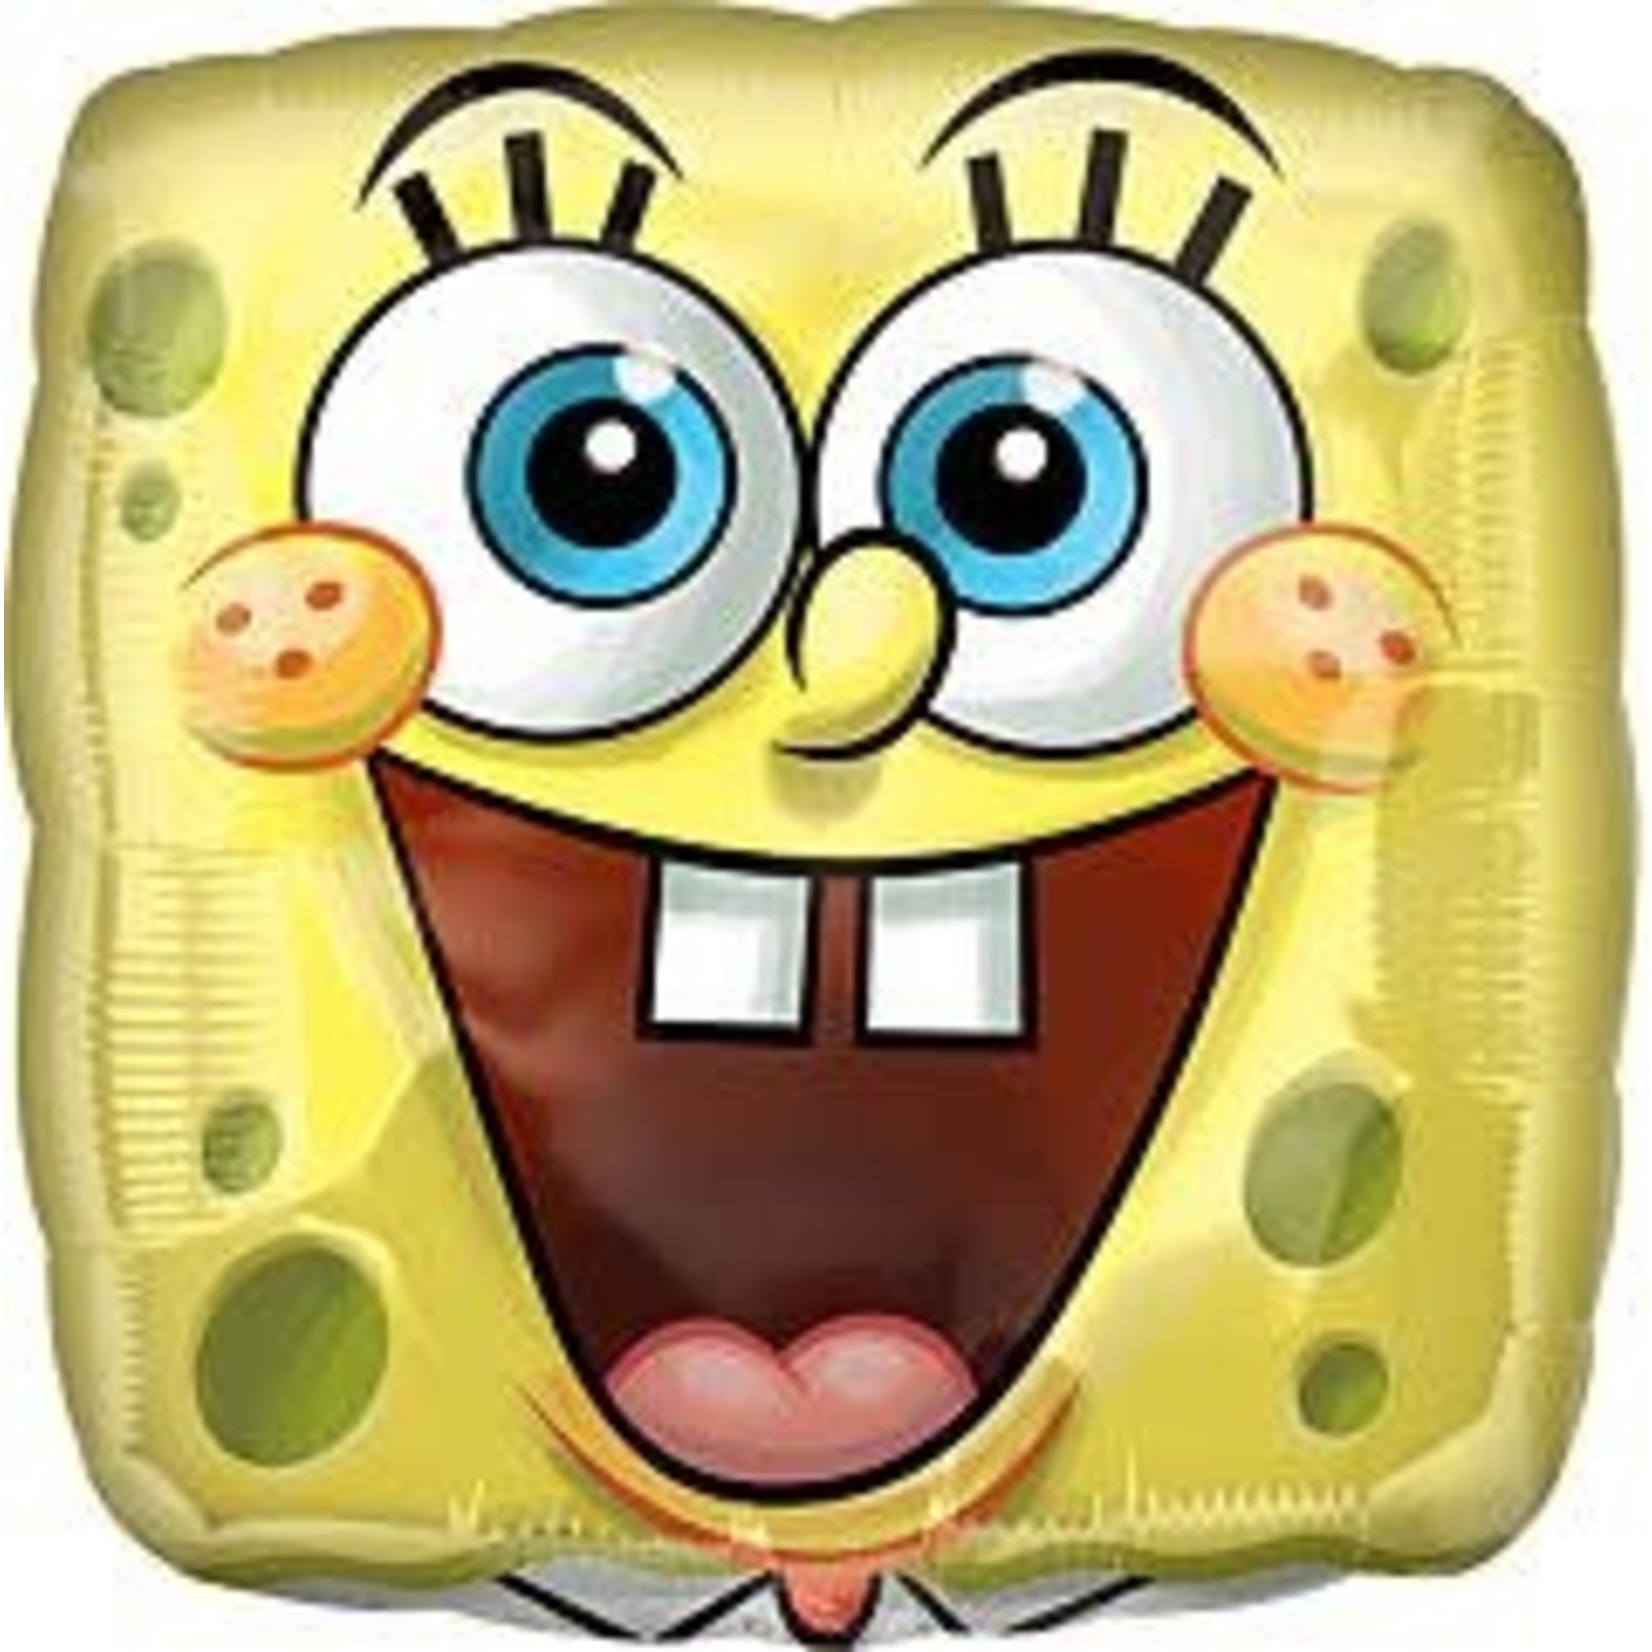 Anagram 18" Spongebobs Face Balloon